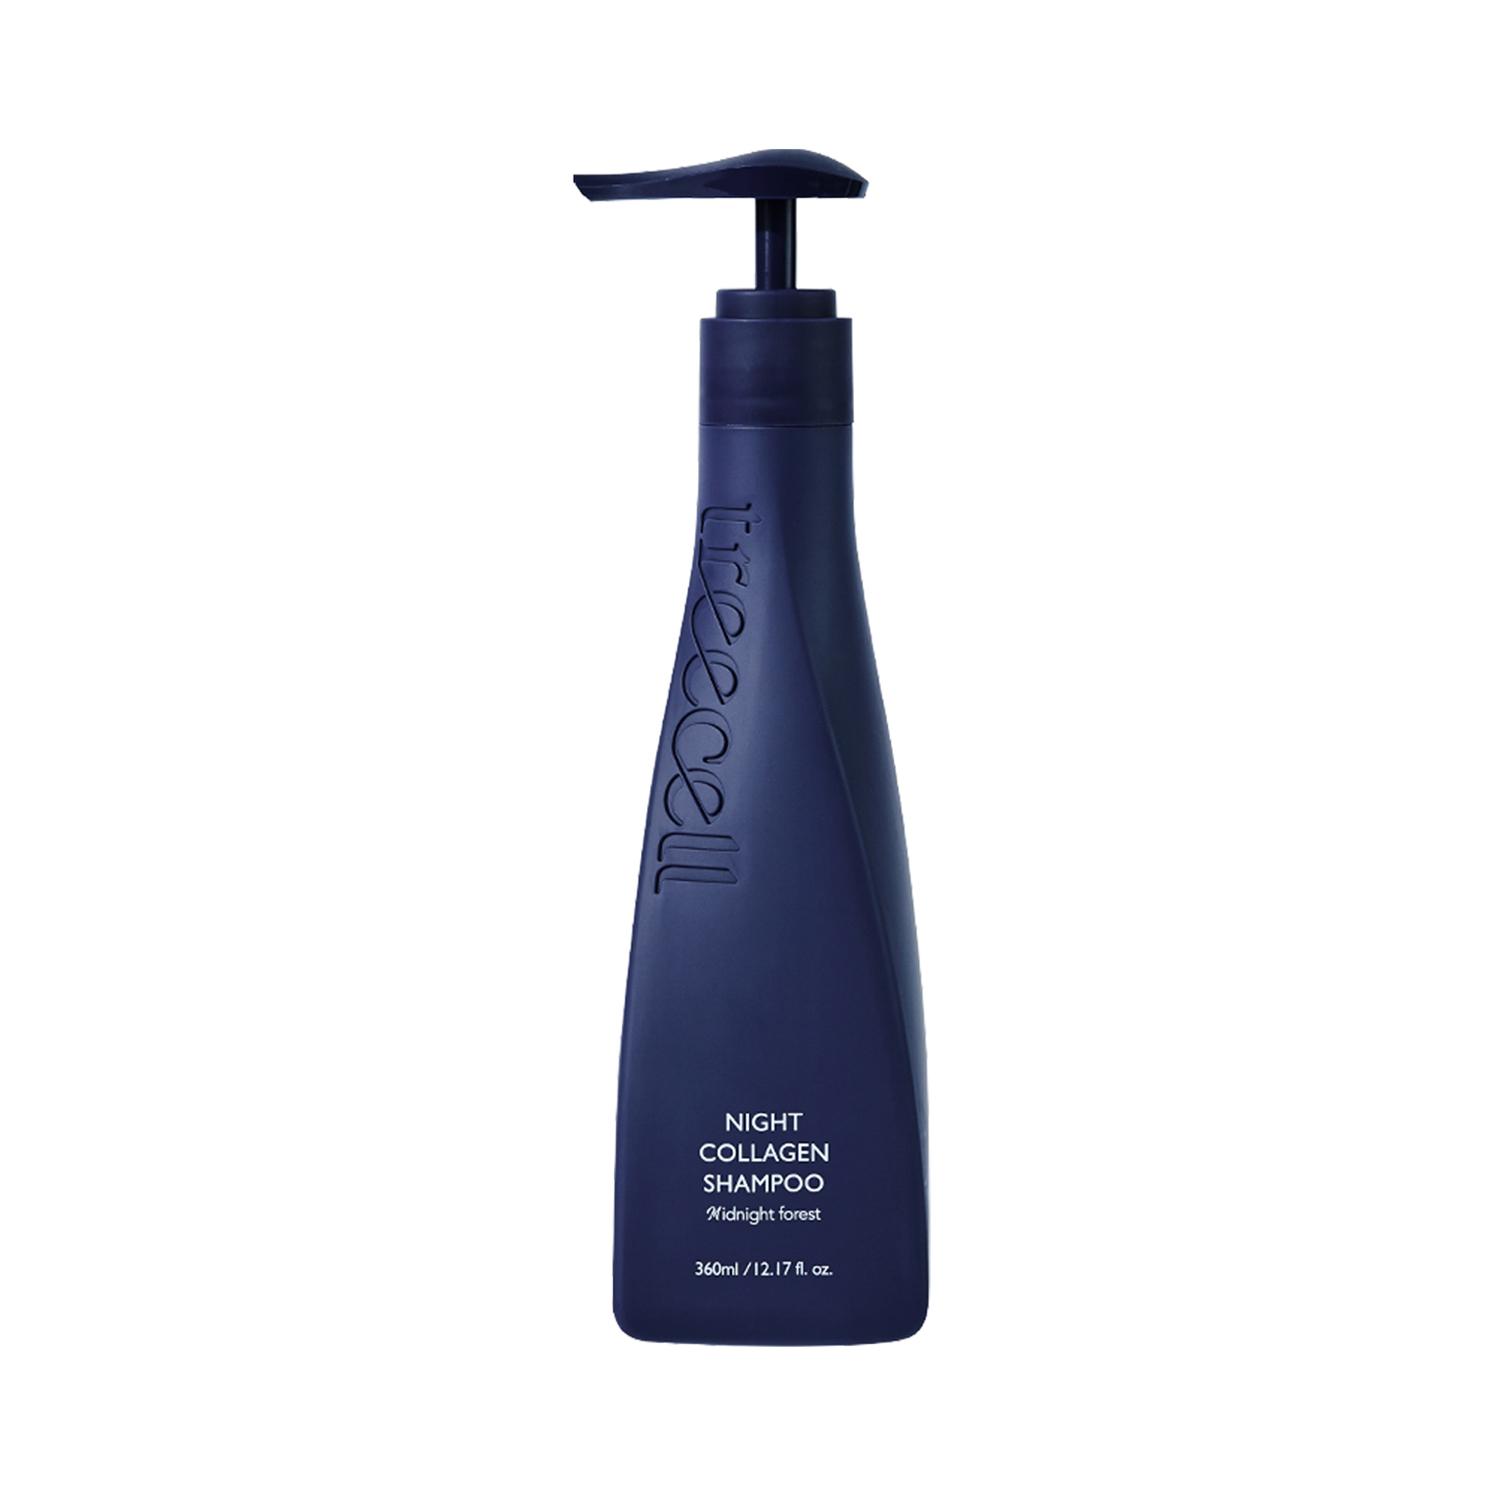 Treecell | Treecell Night Collagen Shampoo Midnight Forest (360 ml)